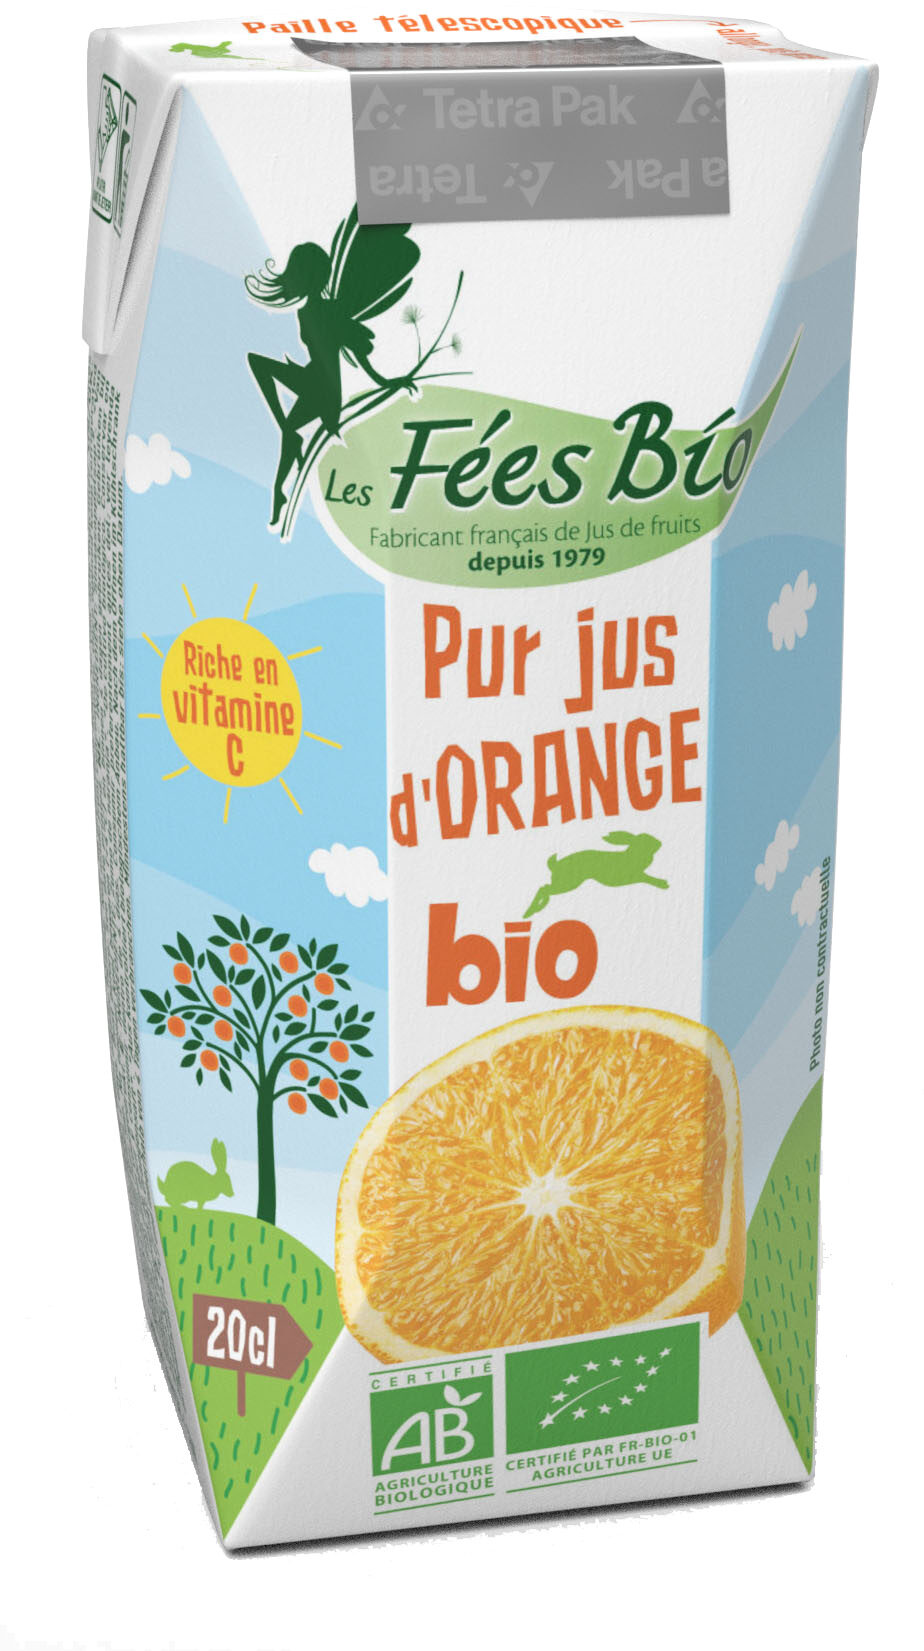 Pur jus d'orange bio - Produkt - fr